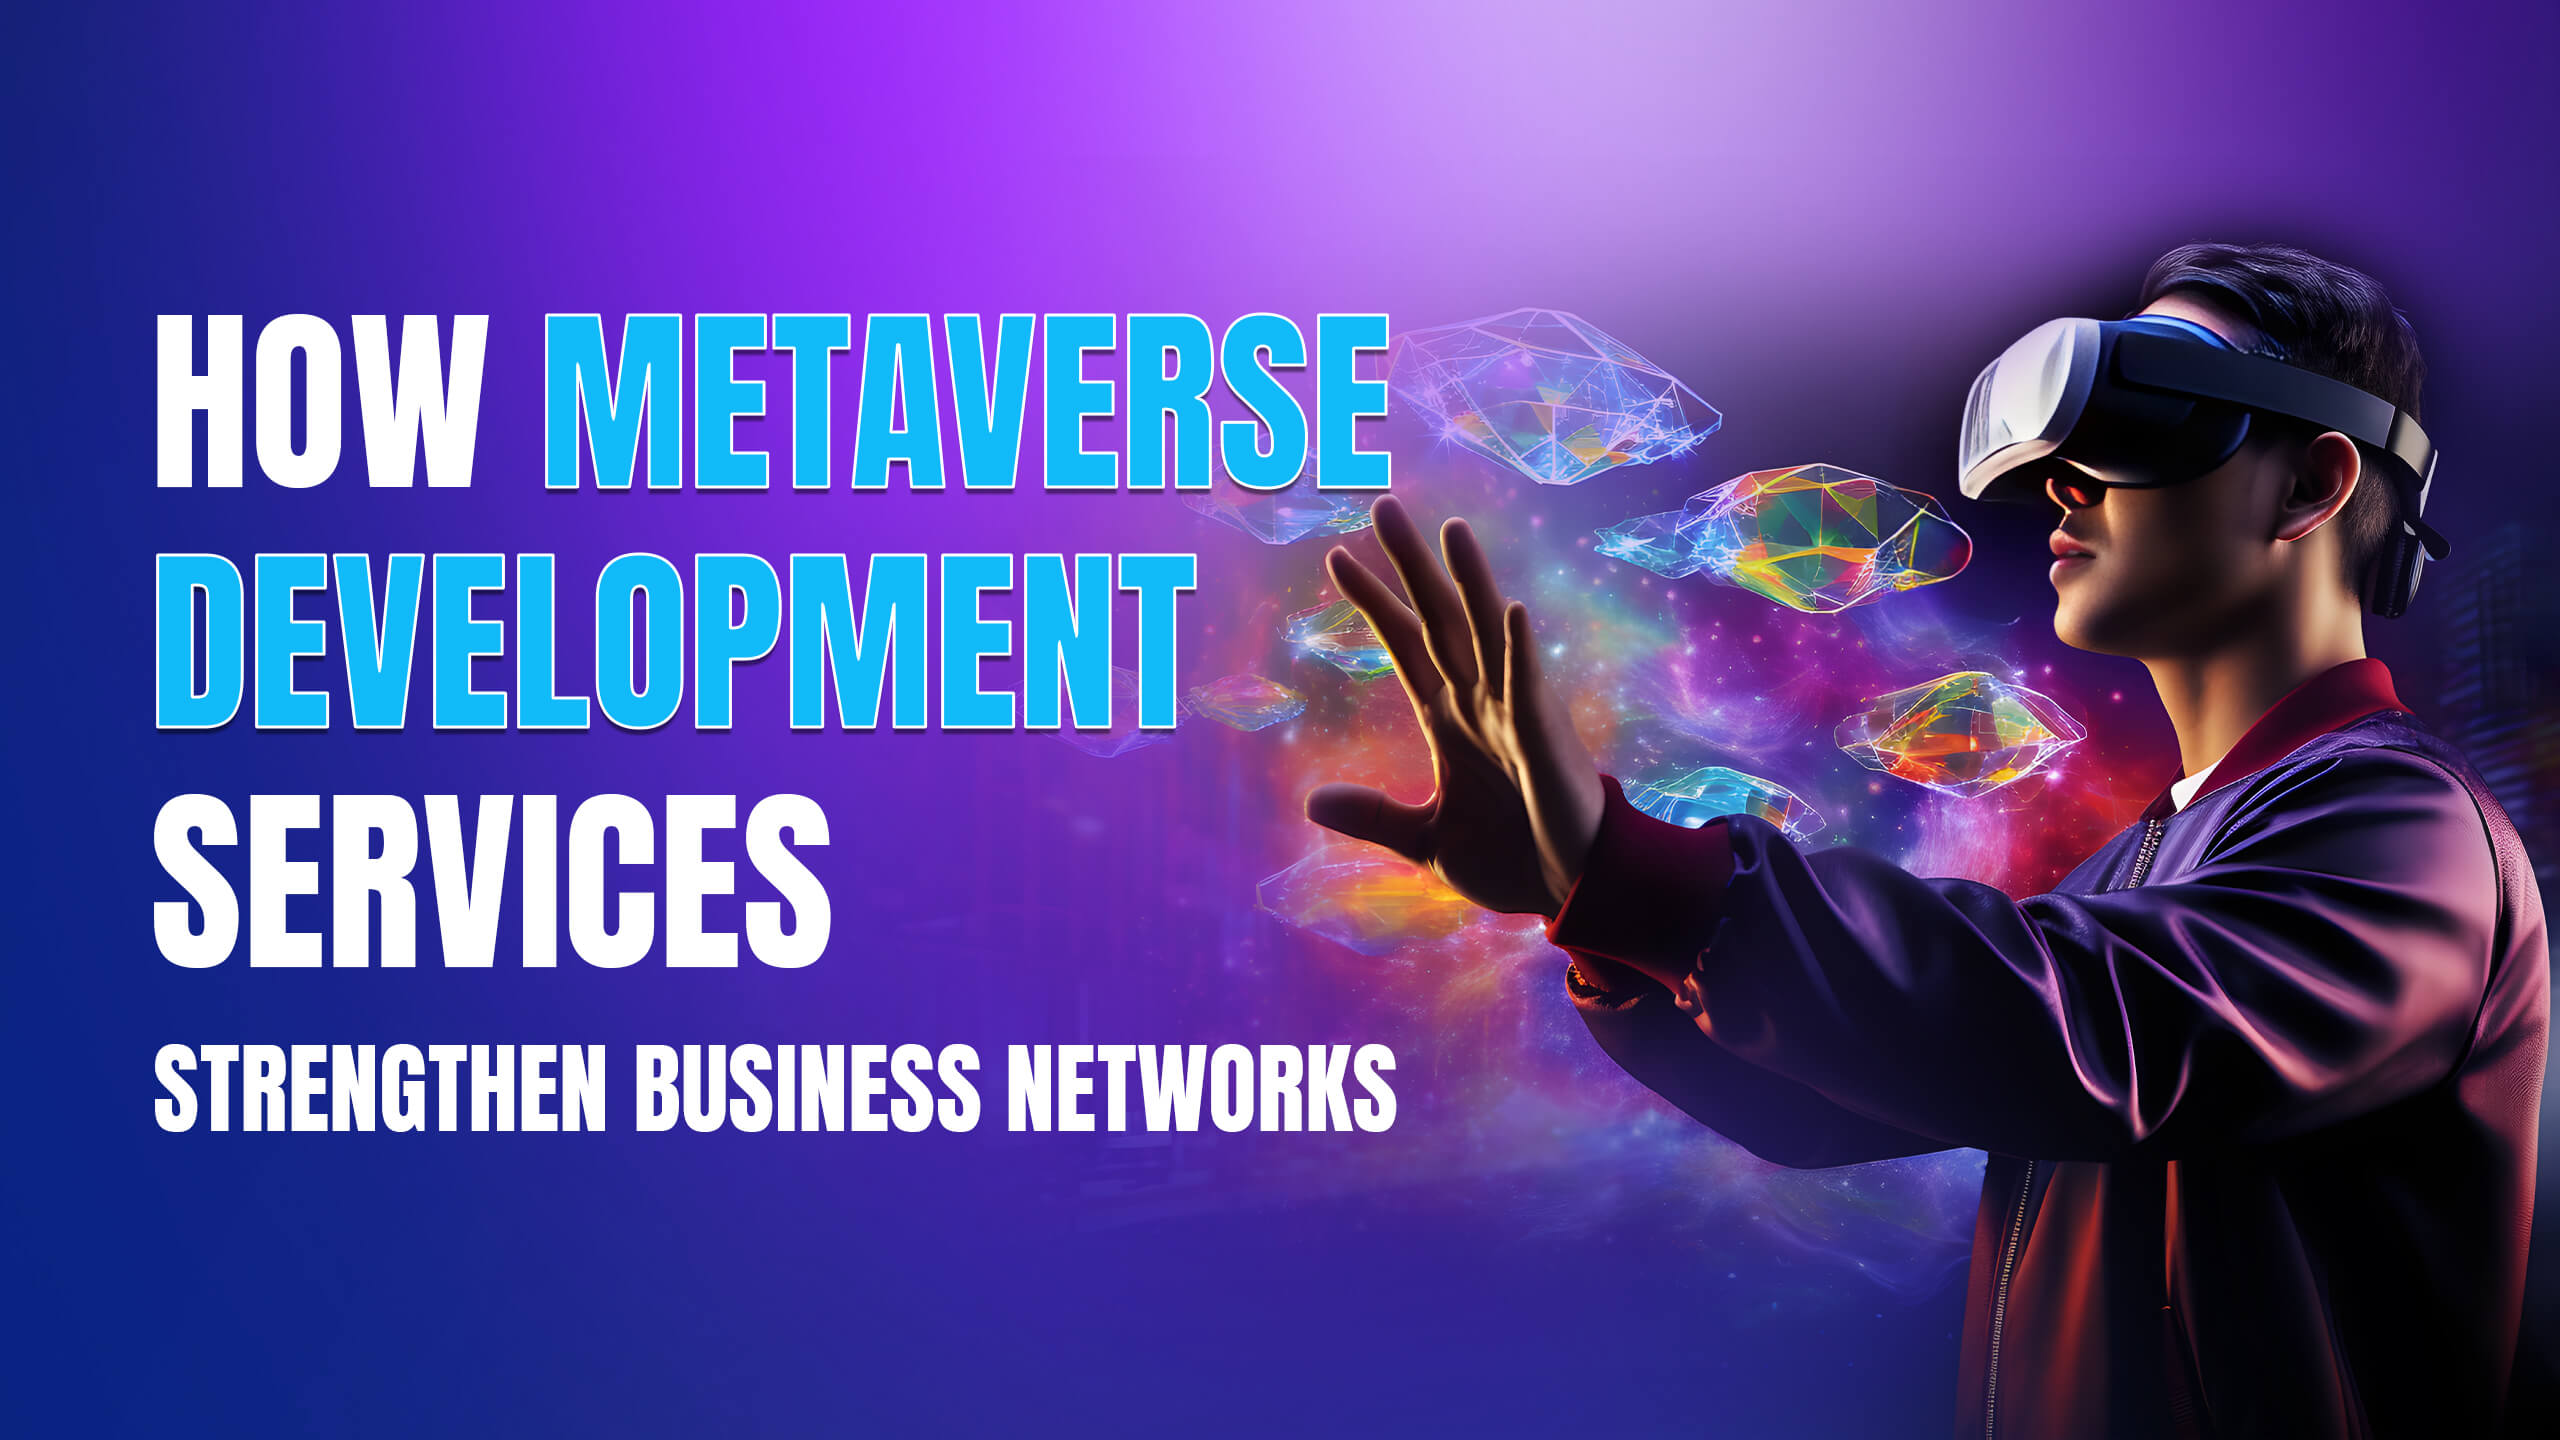 How Metaverse Development Services Strengthen Business Networks